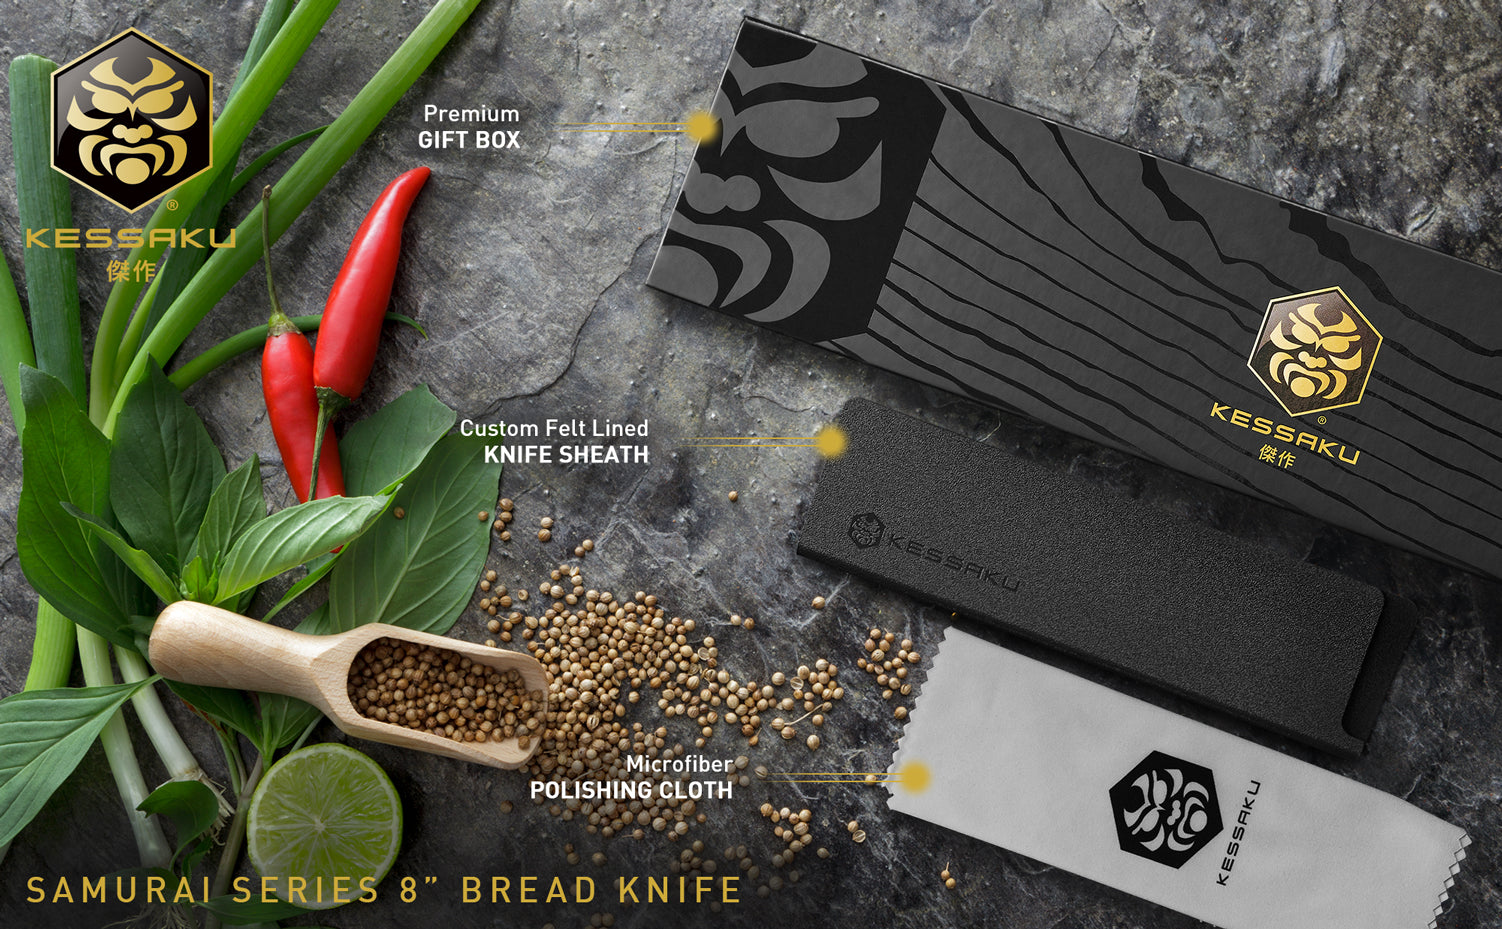 The Kessaku Samurai Series 8-Inch Bread Knife comes with a felt-lined knife sheath, polishing cloth, and premium gift box